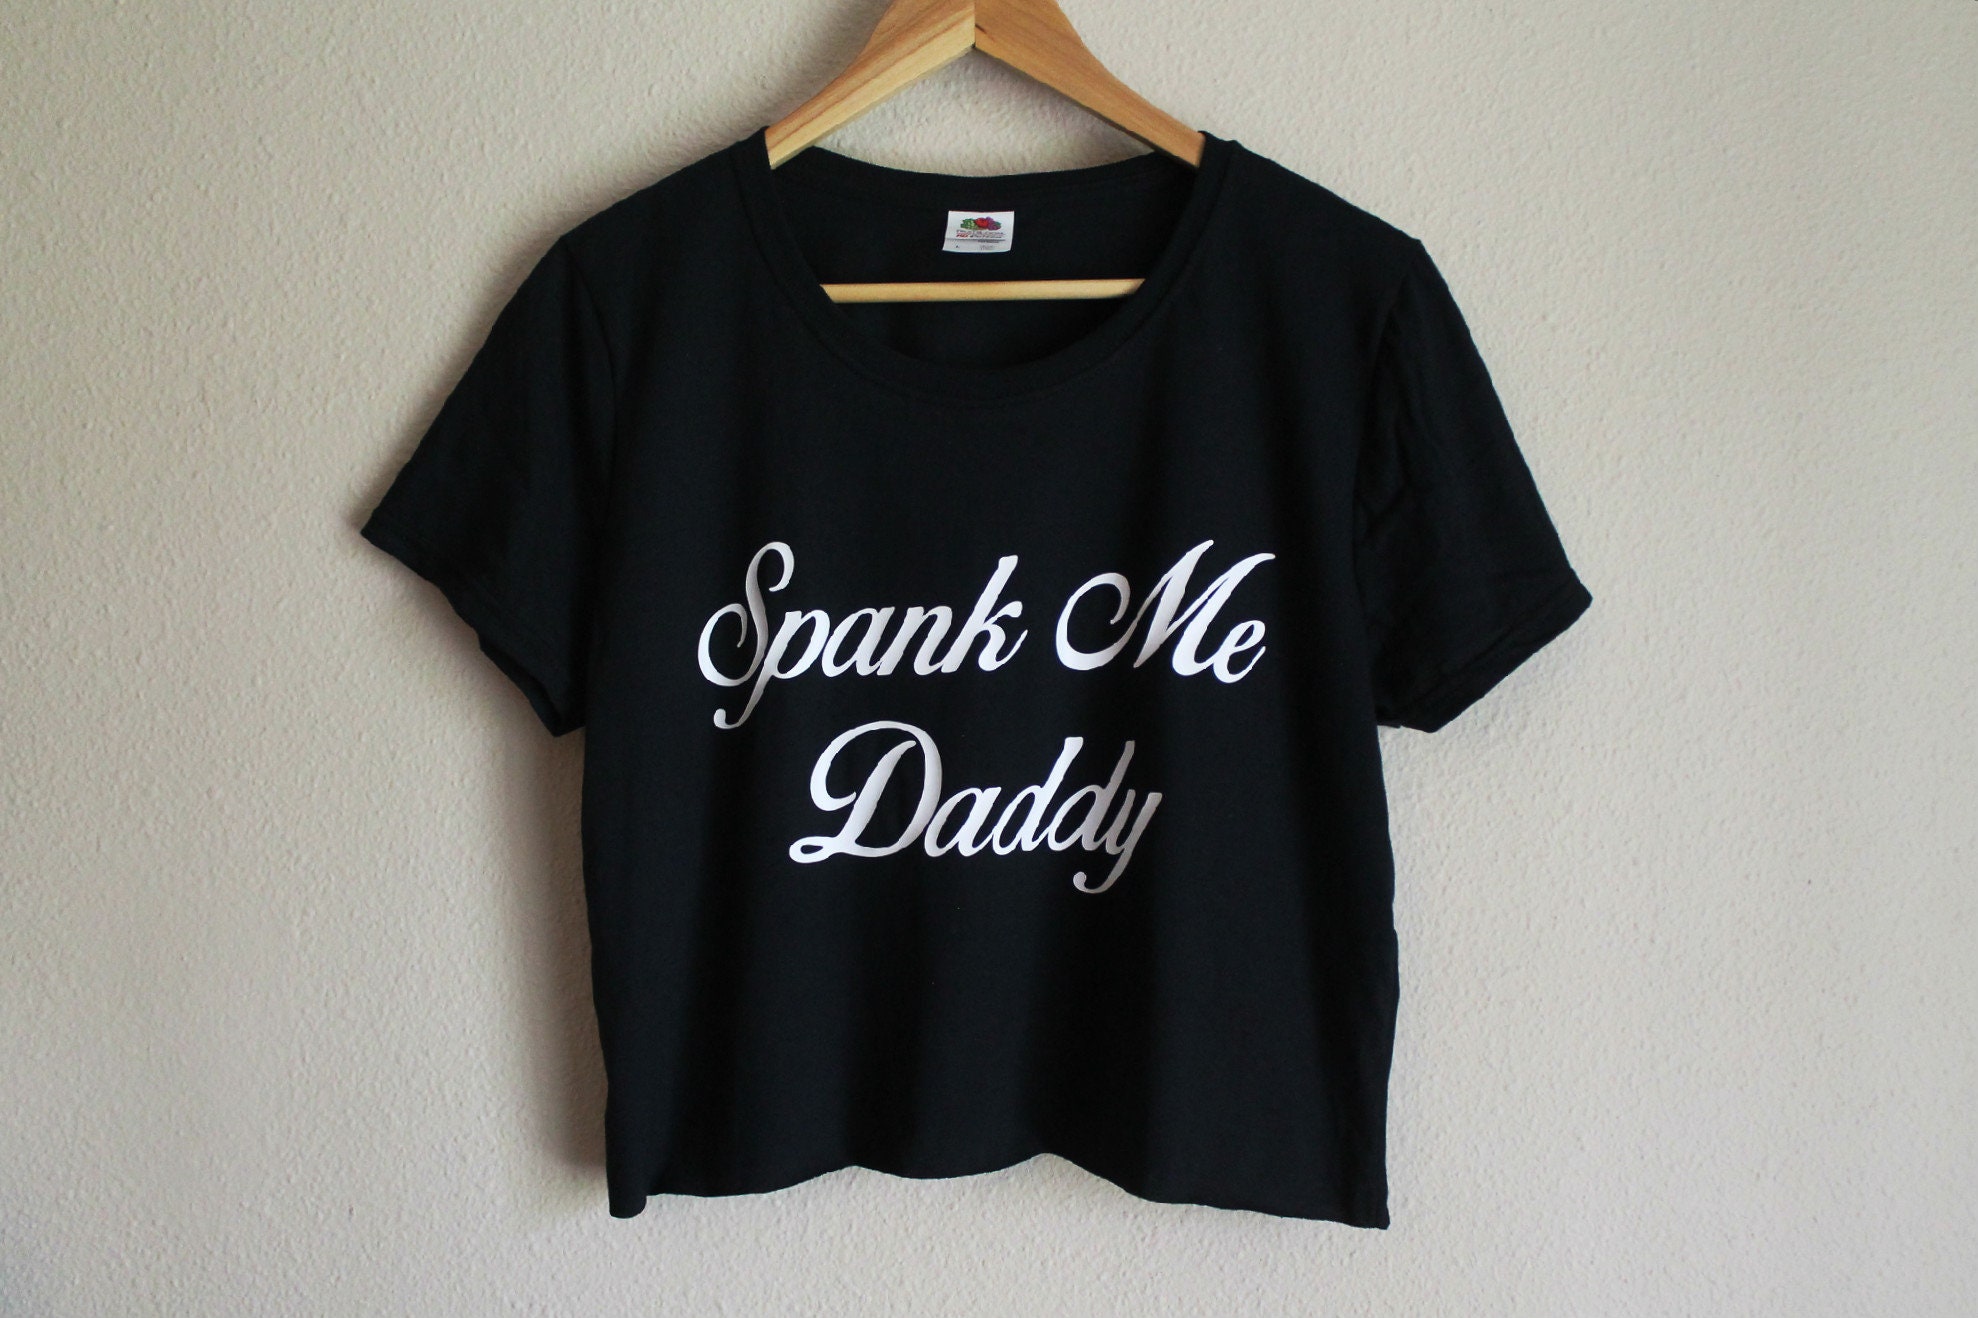 Best of Daddy spank porn